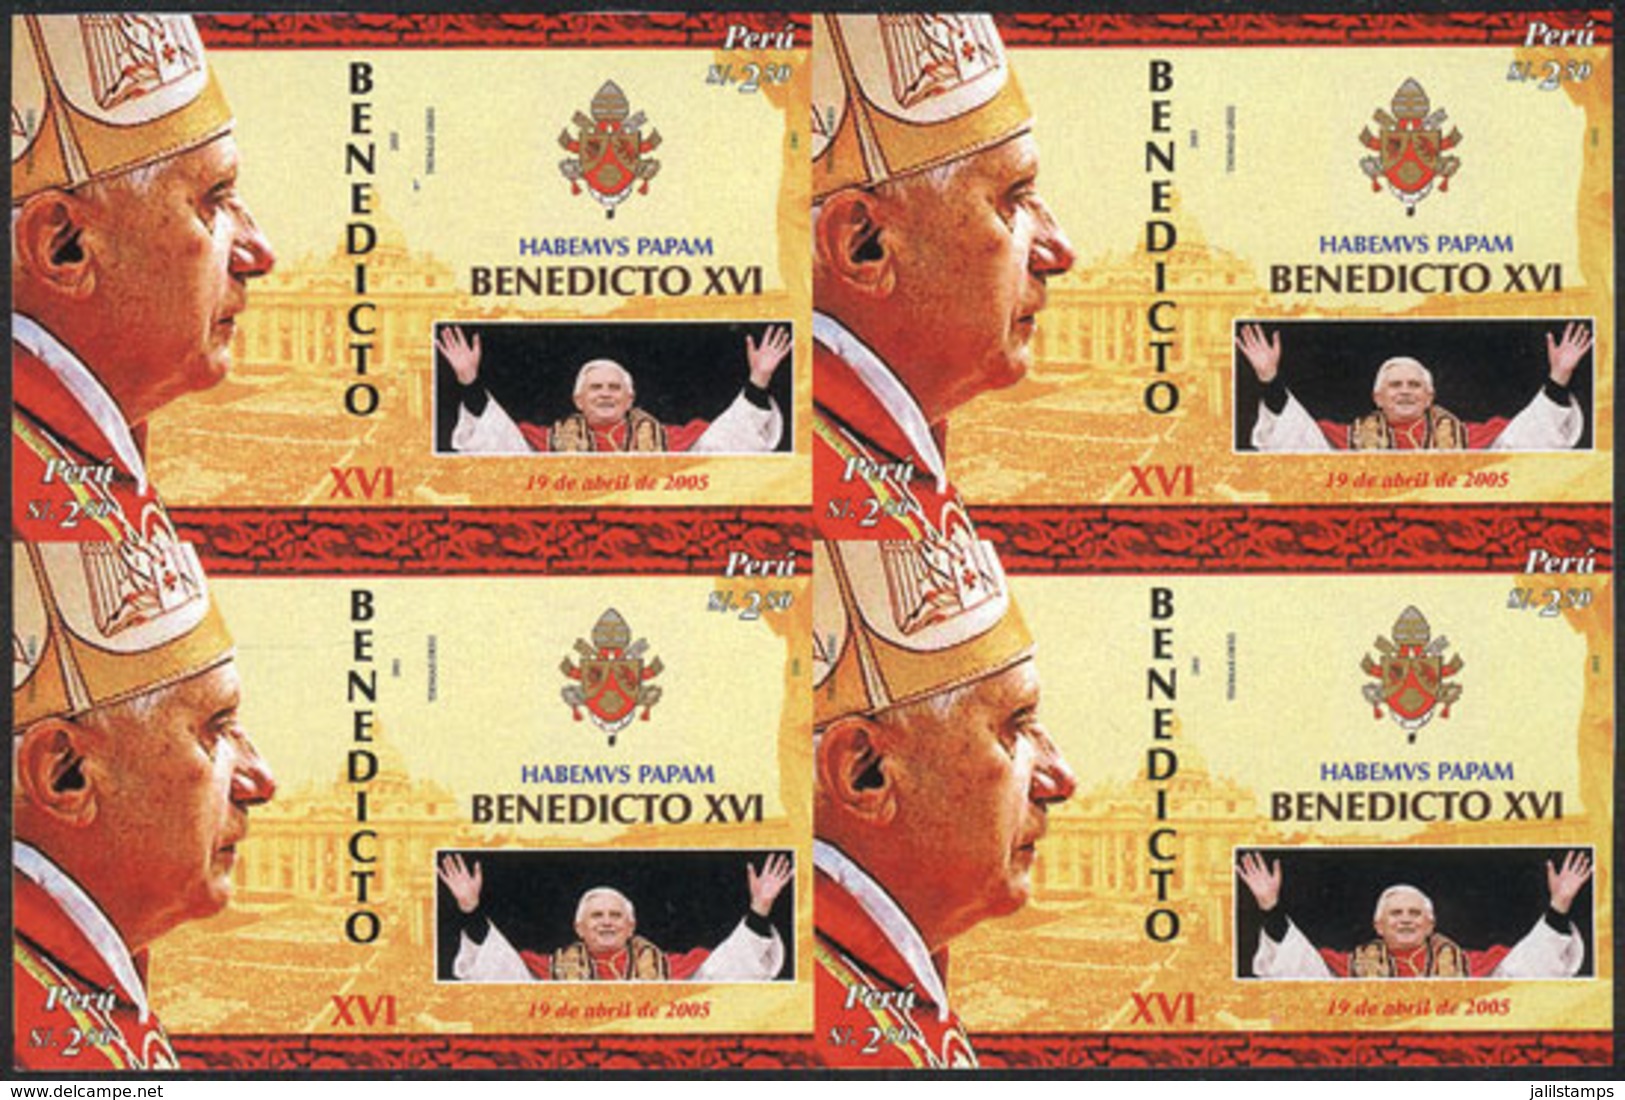 PERU: Sc.1489, 2006 Pope Benedict XVI, IMPERFORATE BLOCK OF 4 Consisting Of 4 Sets, Excellent Quality, Rare! - Peru